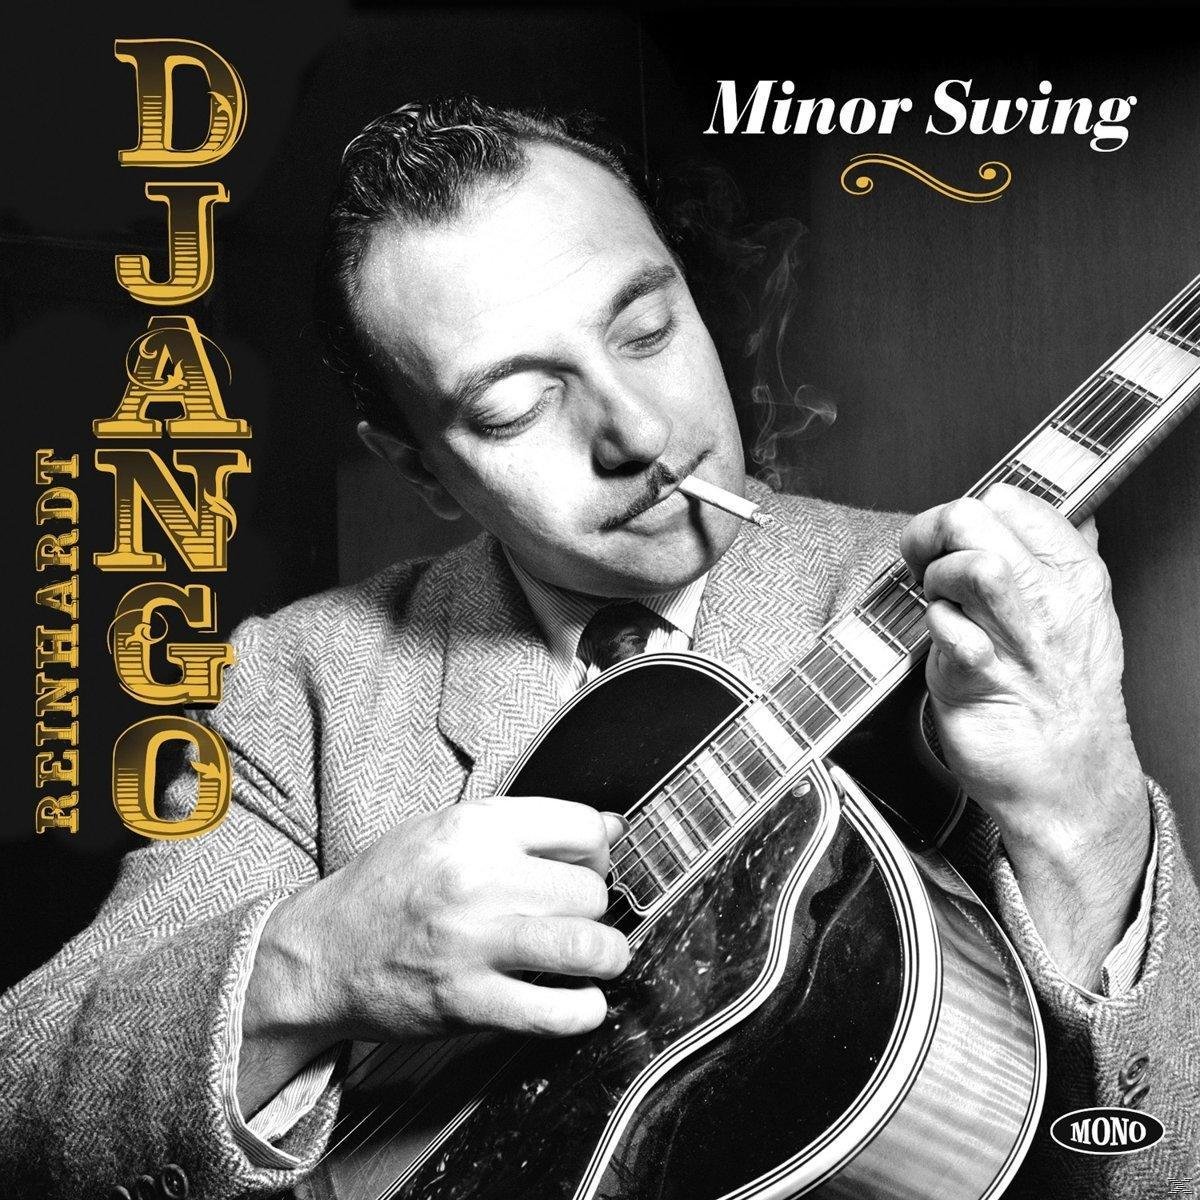 Swing - Reinhardt (Vinyl) - Django Minor